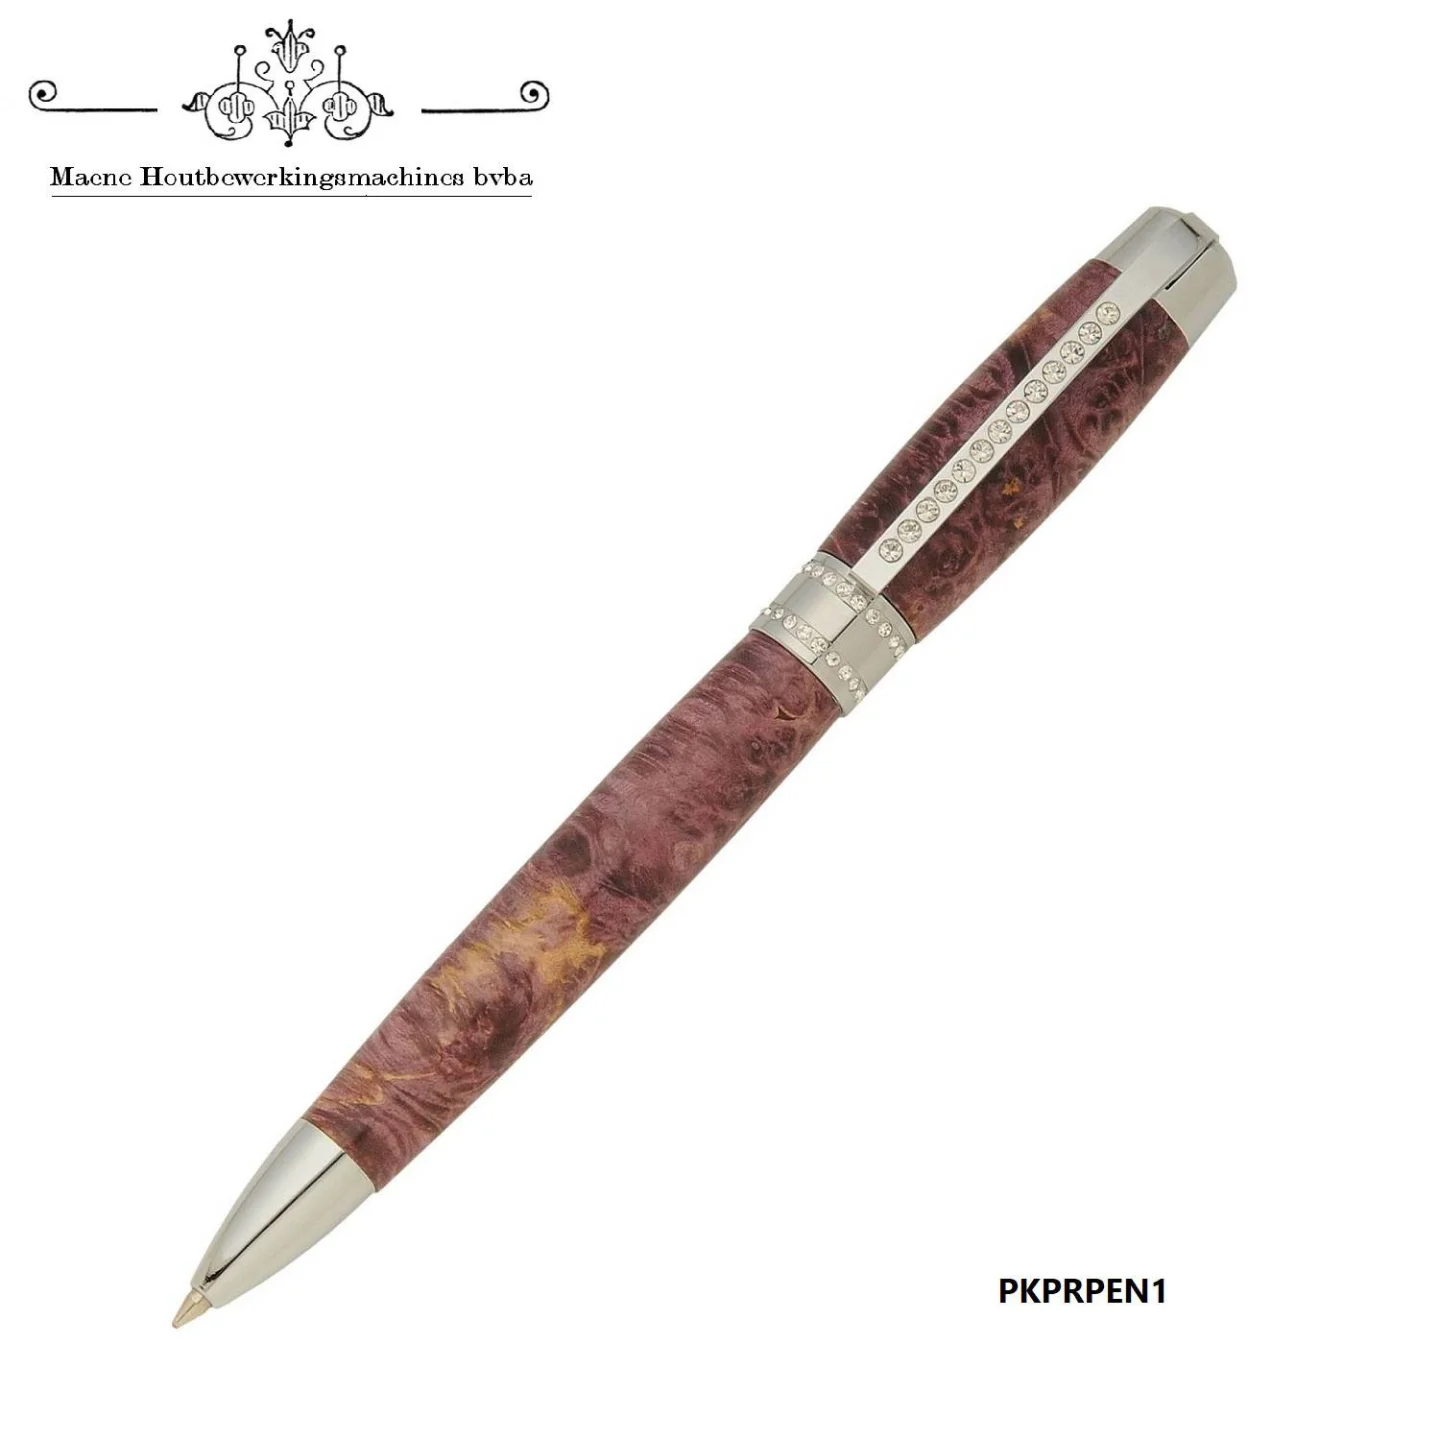 princess pen kit PKPRPEN1.